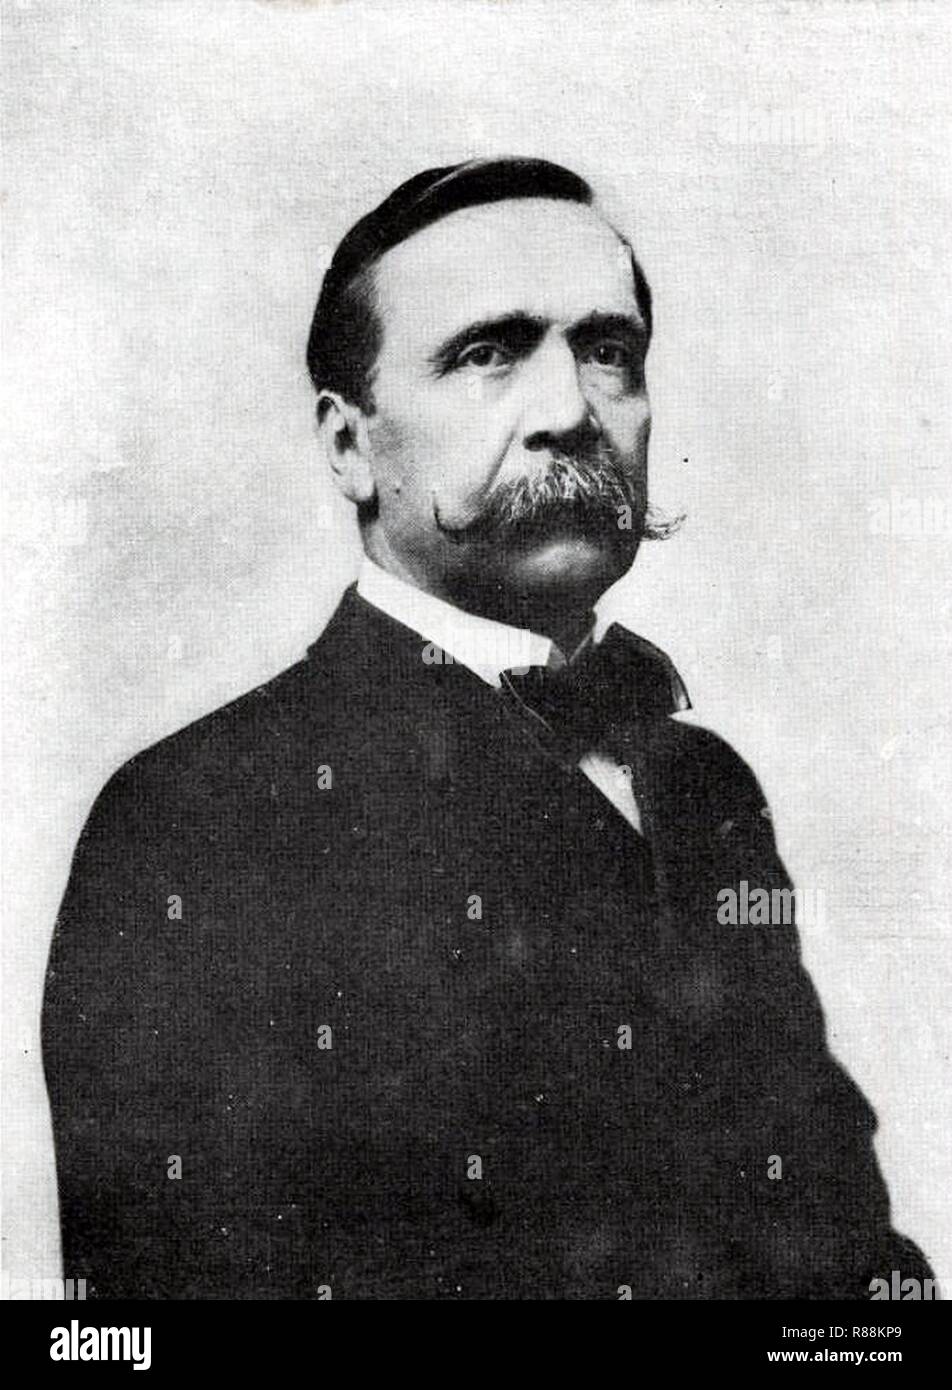 Carlos Pellegrini - 1910. Stock Photo